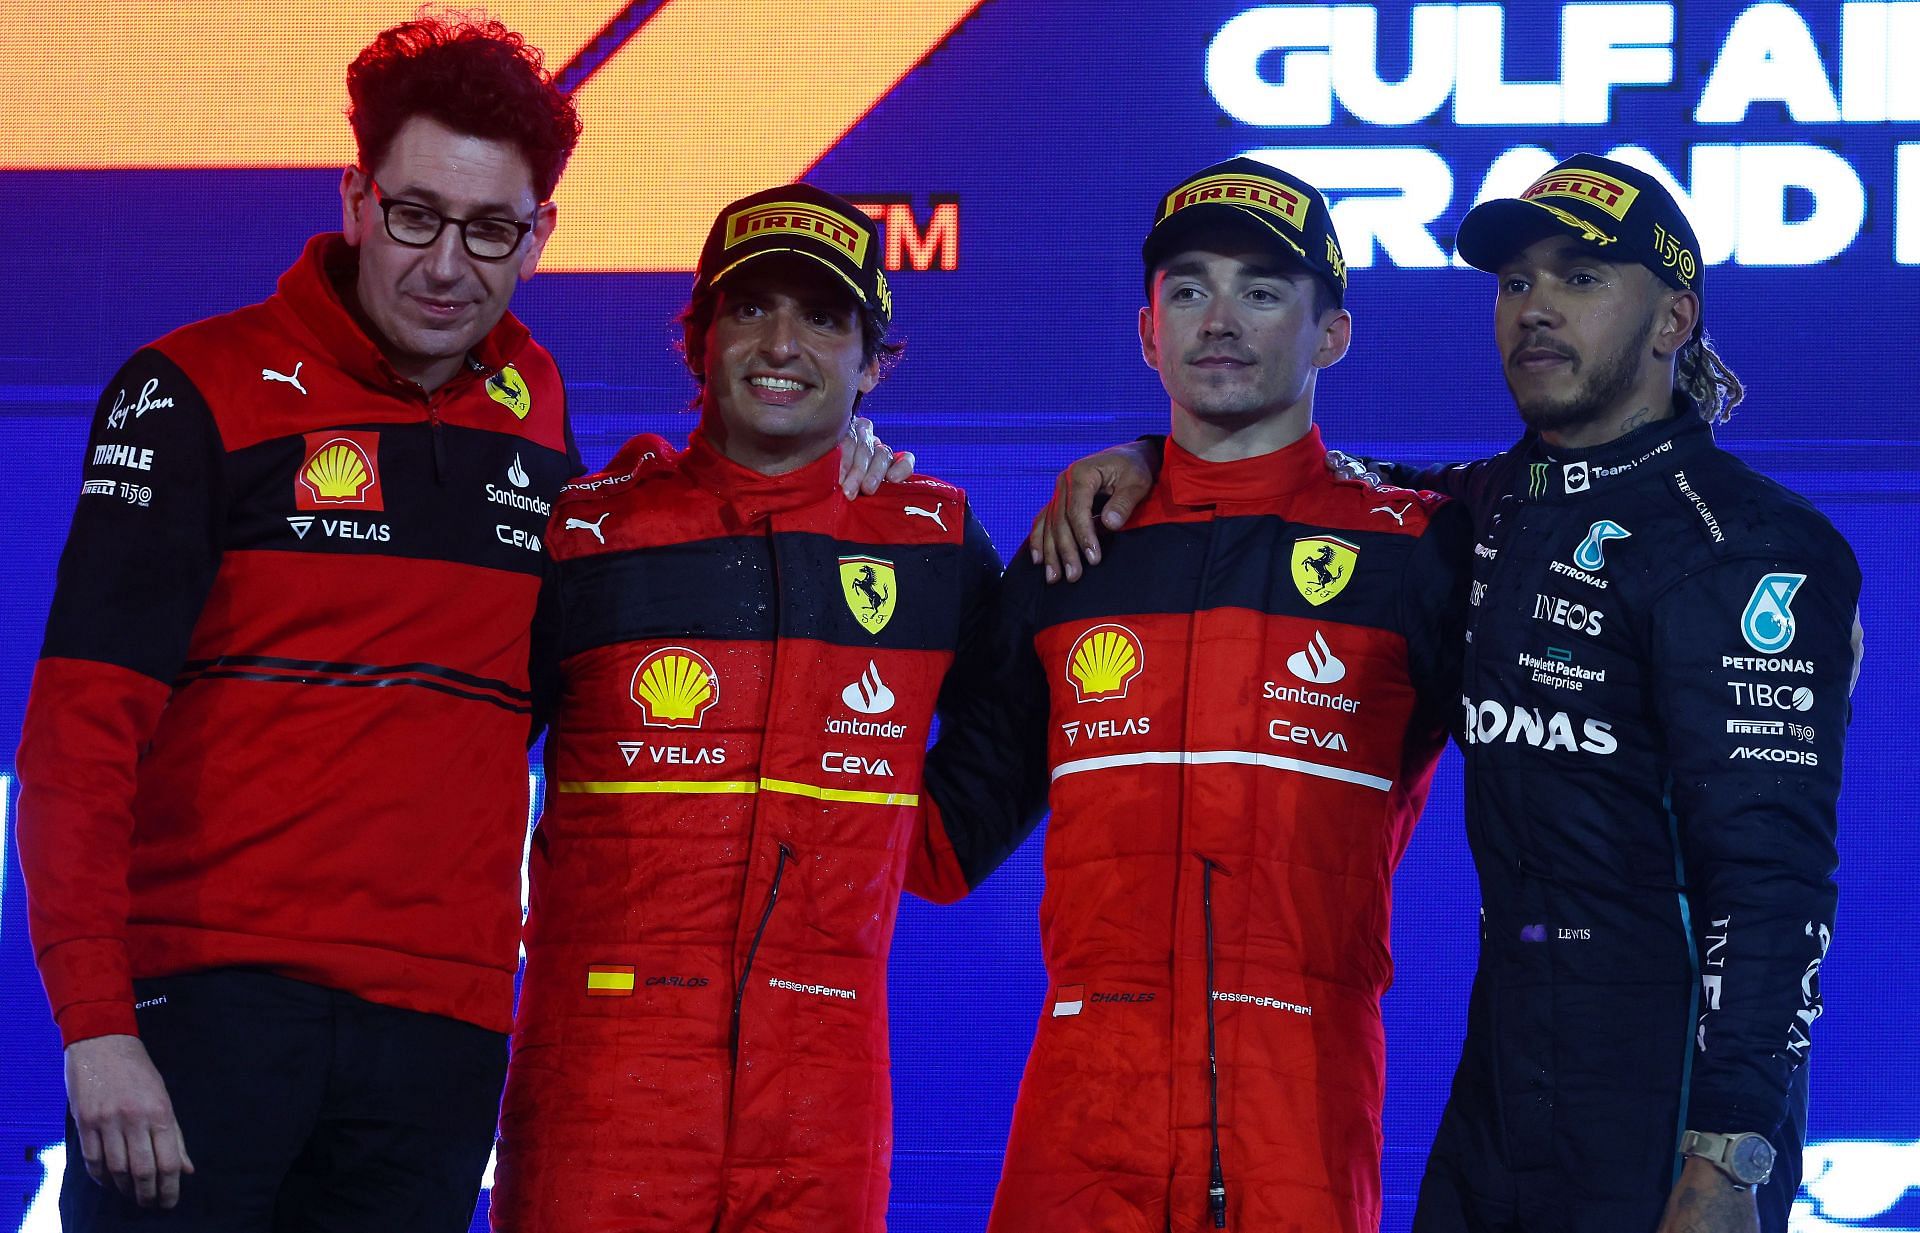 The Bahrain GP featured the first Ferrari win since 2019